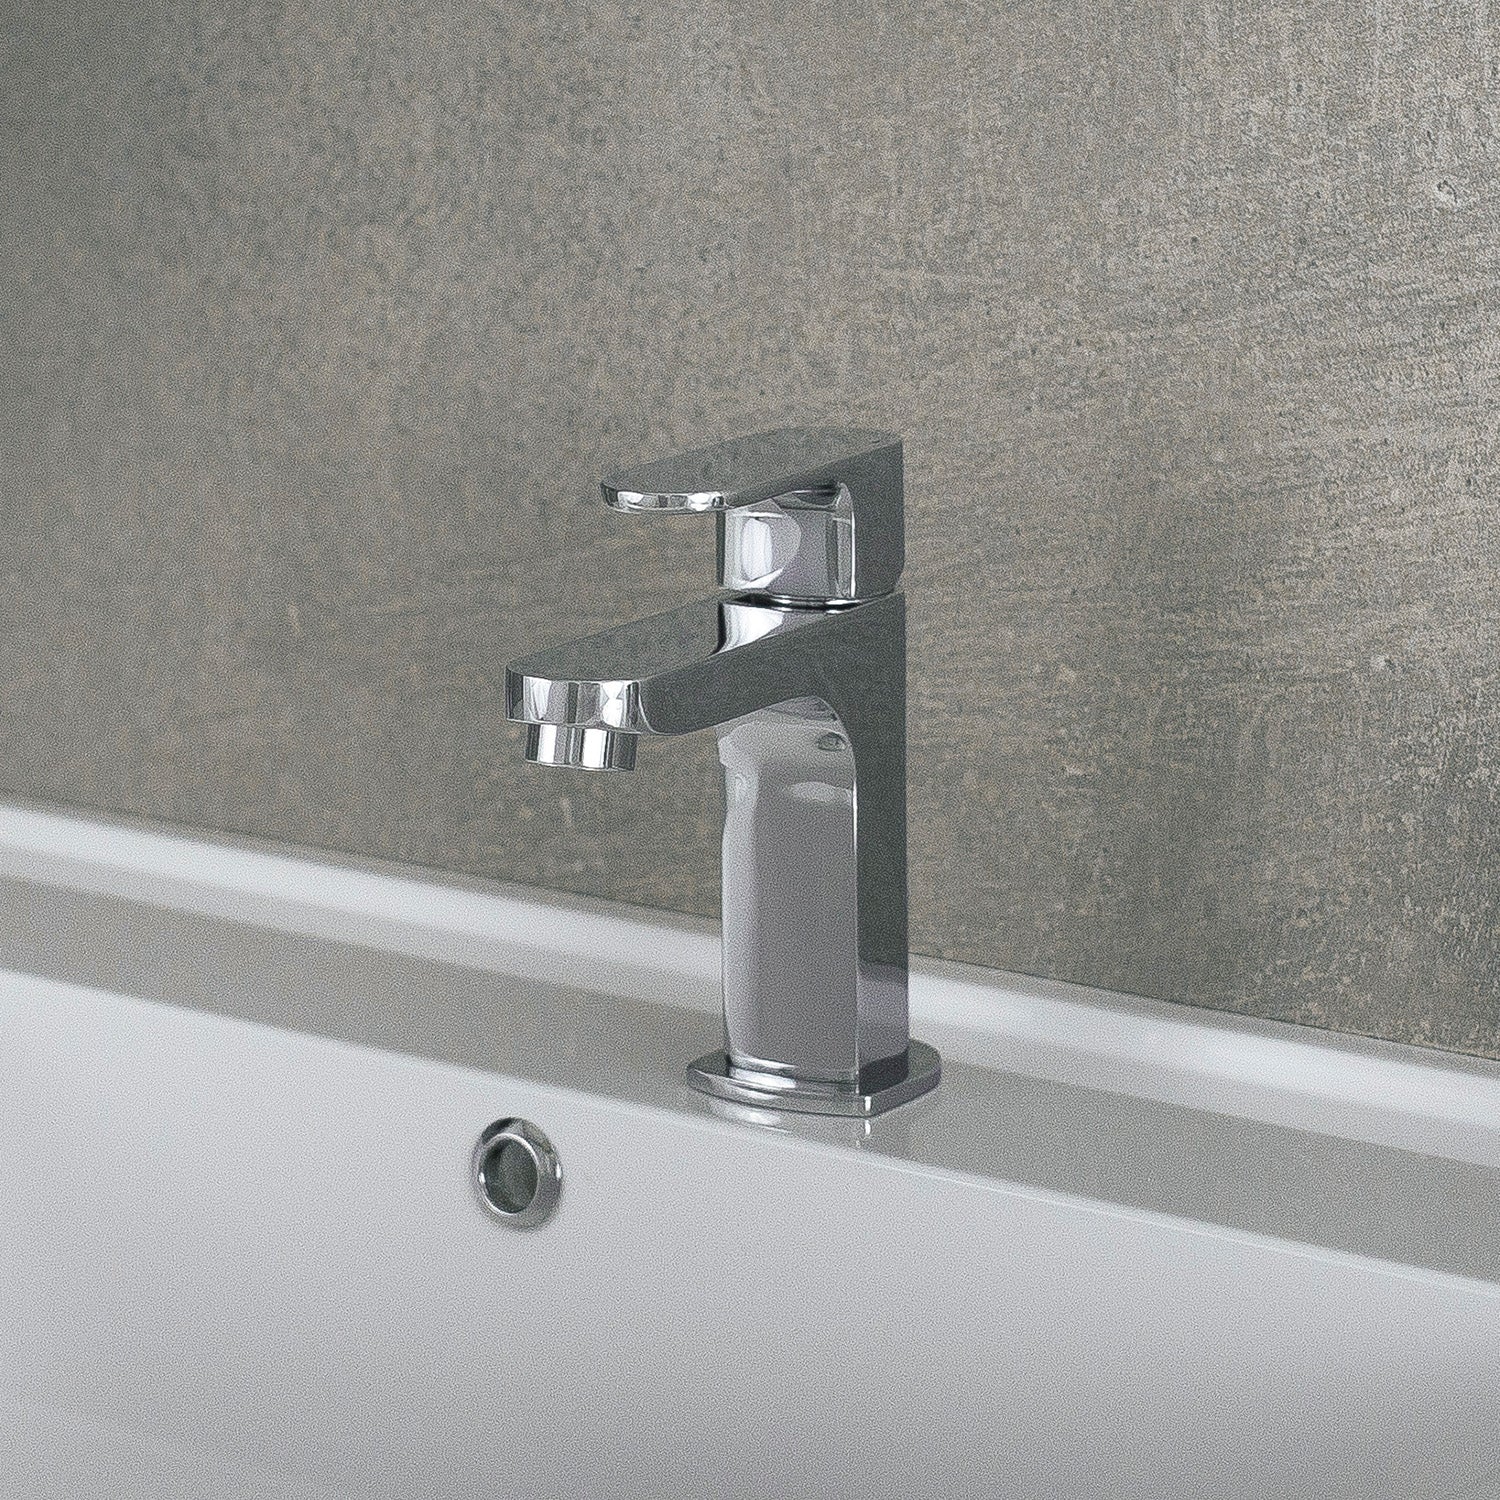 DAX Single Handle Bathroom Faucet, Brass Body, Chrome Finish, 3-15/16 x 5-13/16 Inches (DAX-9829)